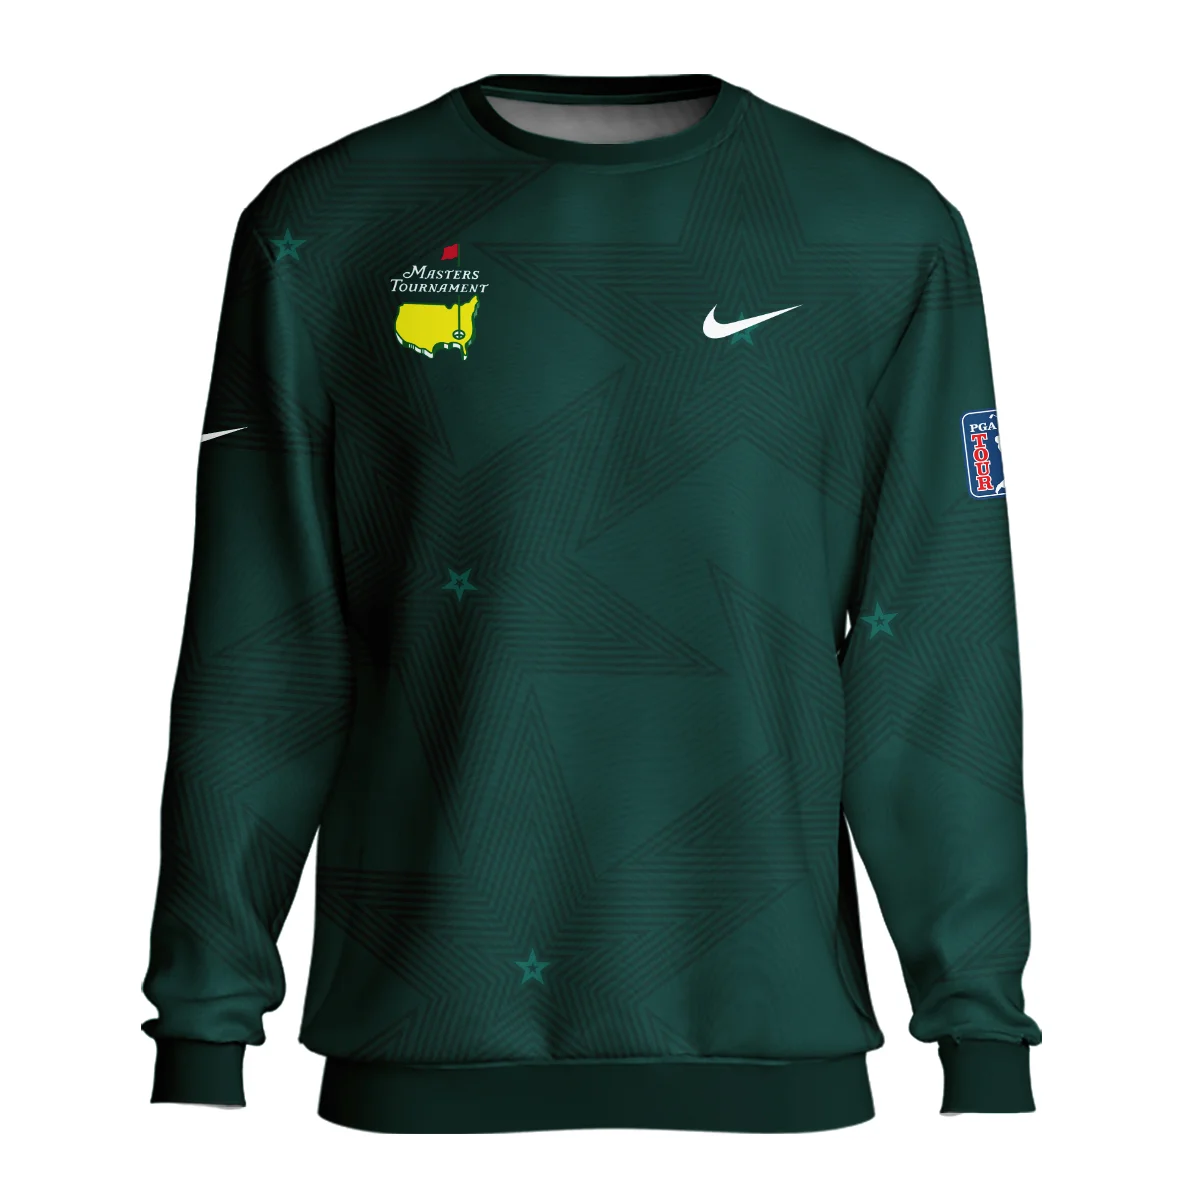 Golf Pattern Stars Dark Green Masters Tournament Nike Unisex Sweatshirt Style Classic Sweatshirt